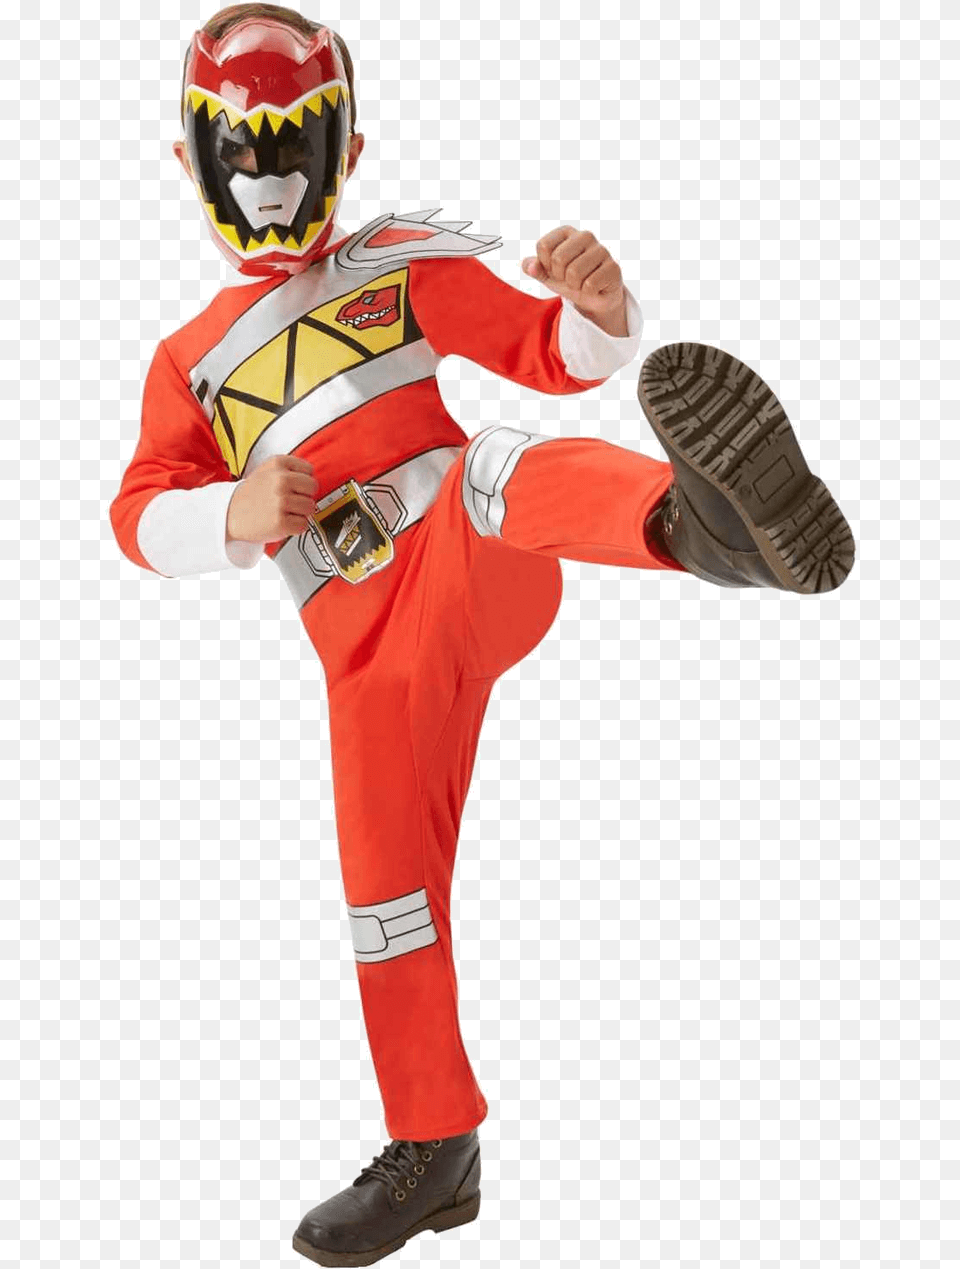 Transparent Red Ranger Red Power Ranger Costume Uk, Clothing, Shoe, Footwear, Person Png Image